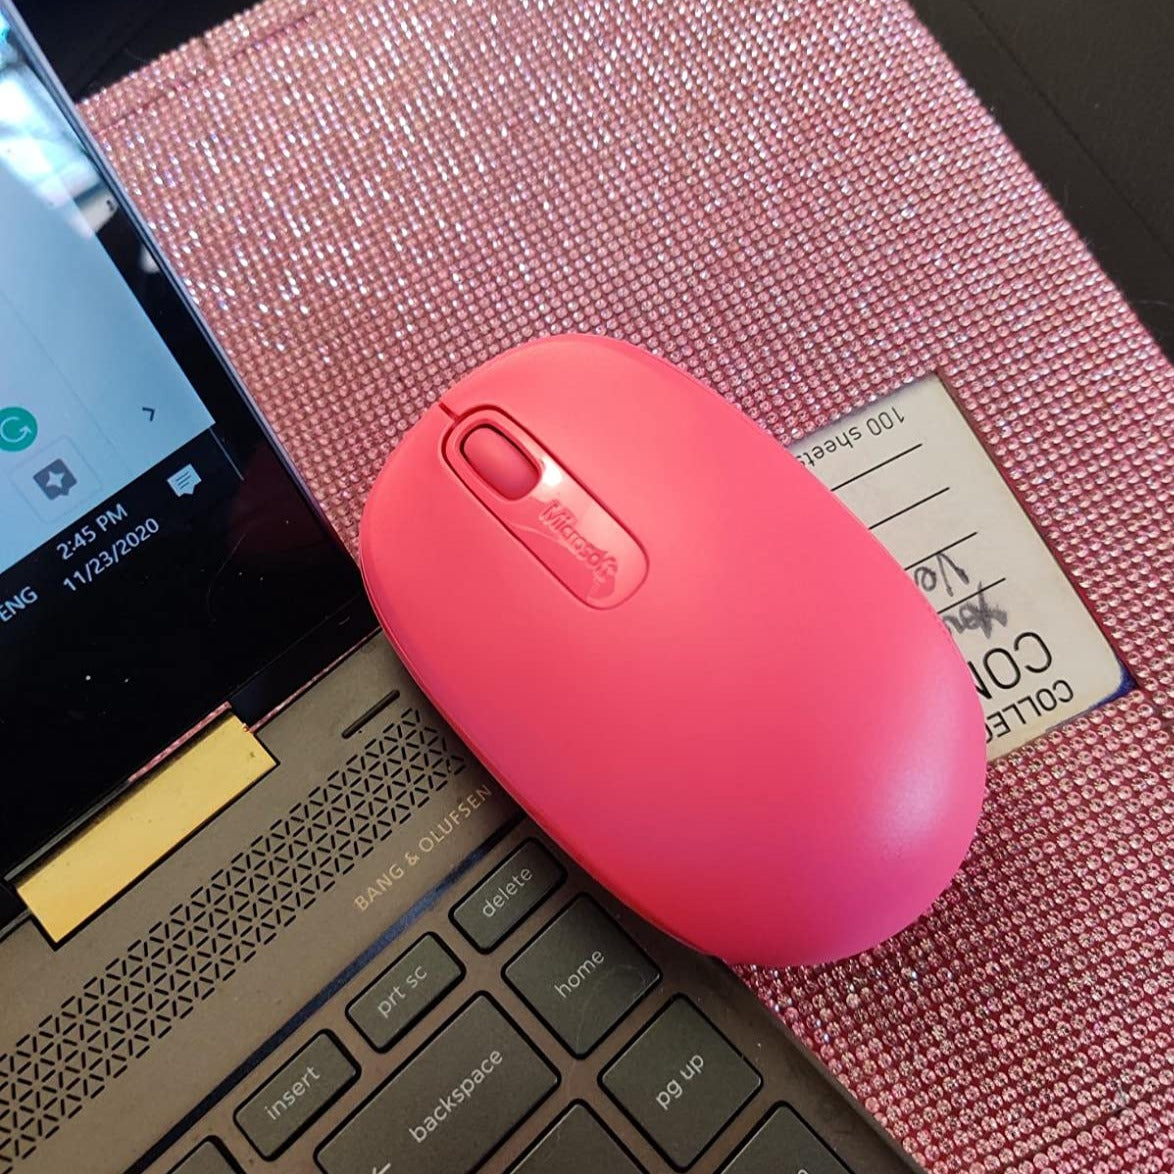 Mouse Microsoft Mobile 1850, inalámbrico (USB 2.4 GHz)